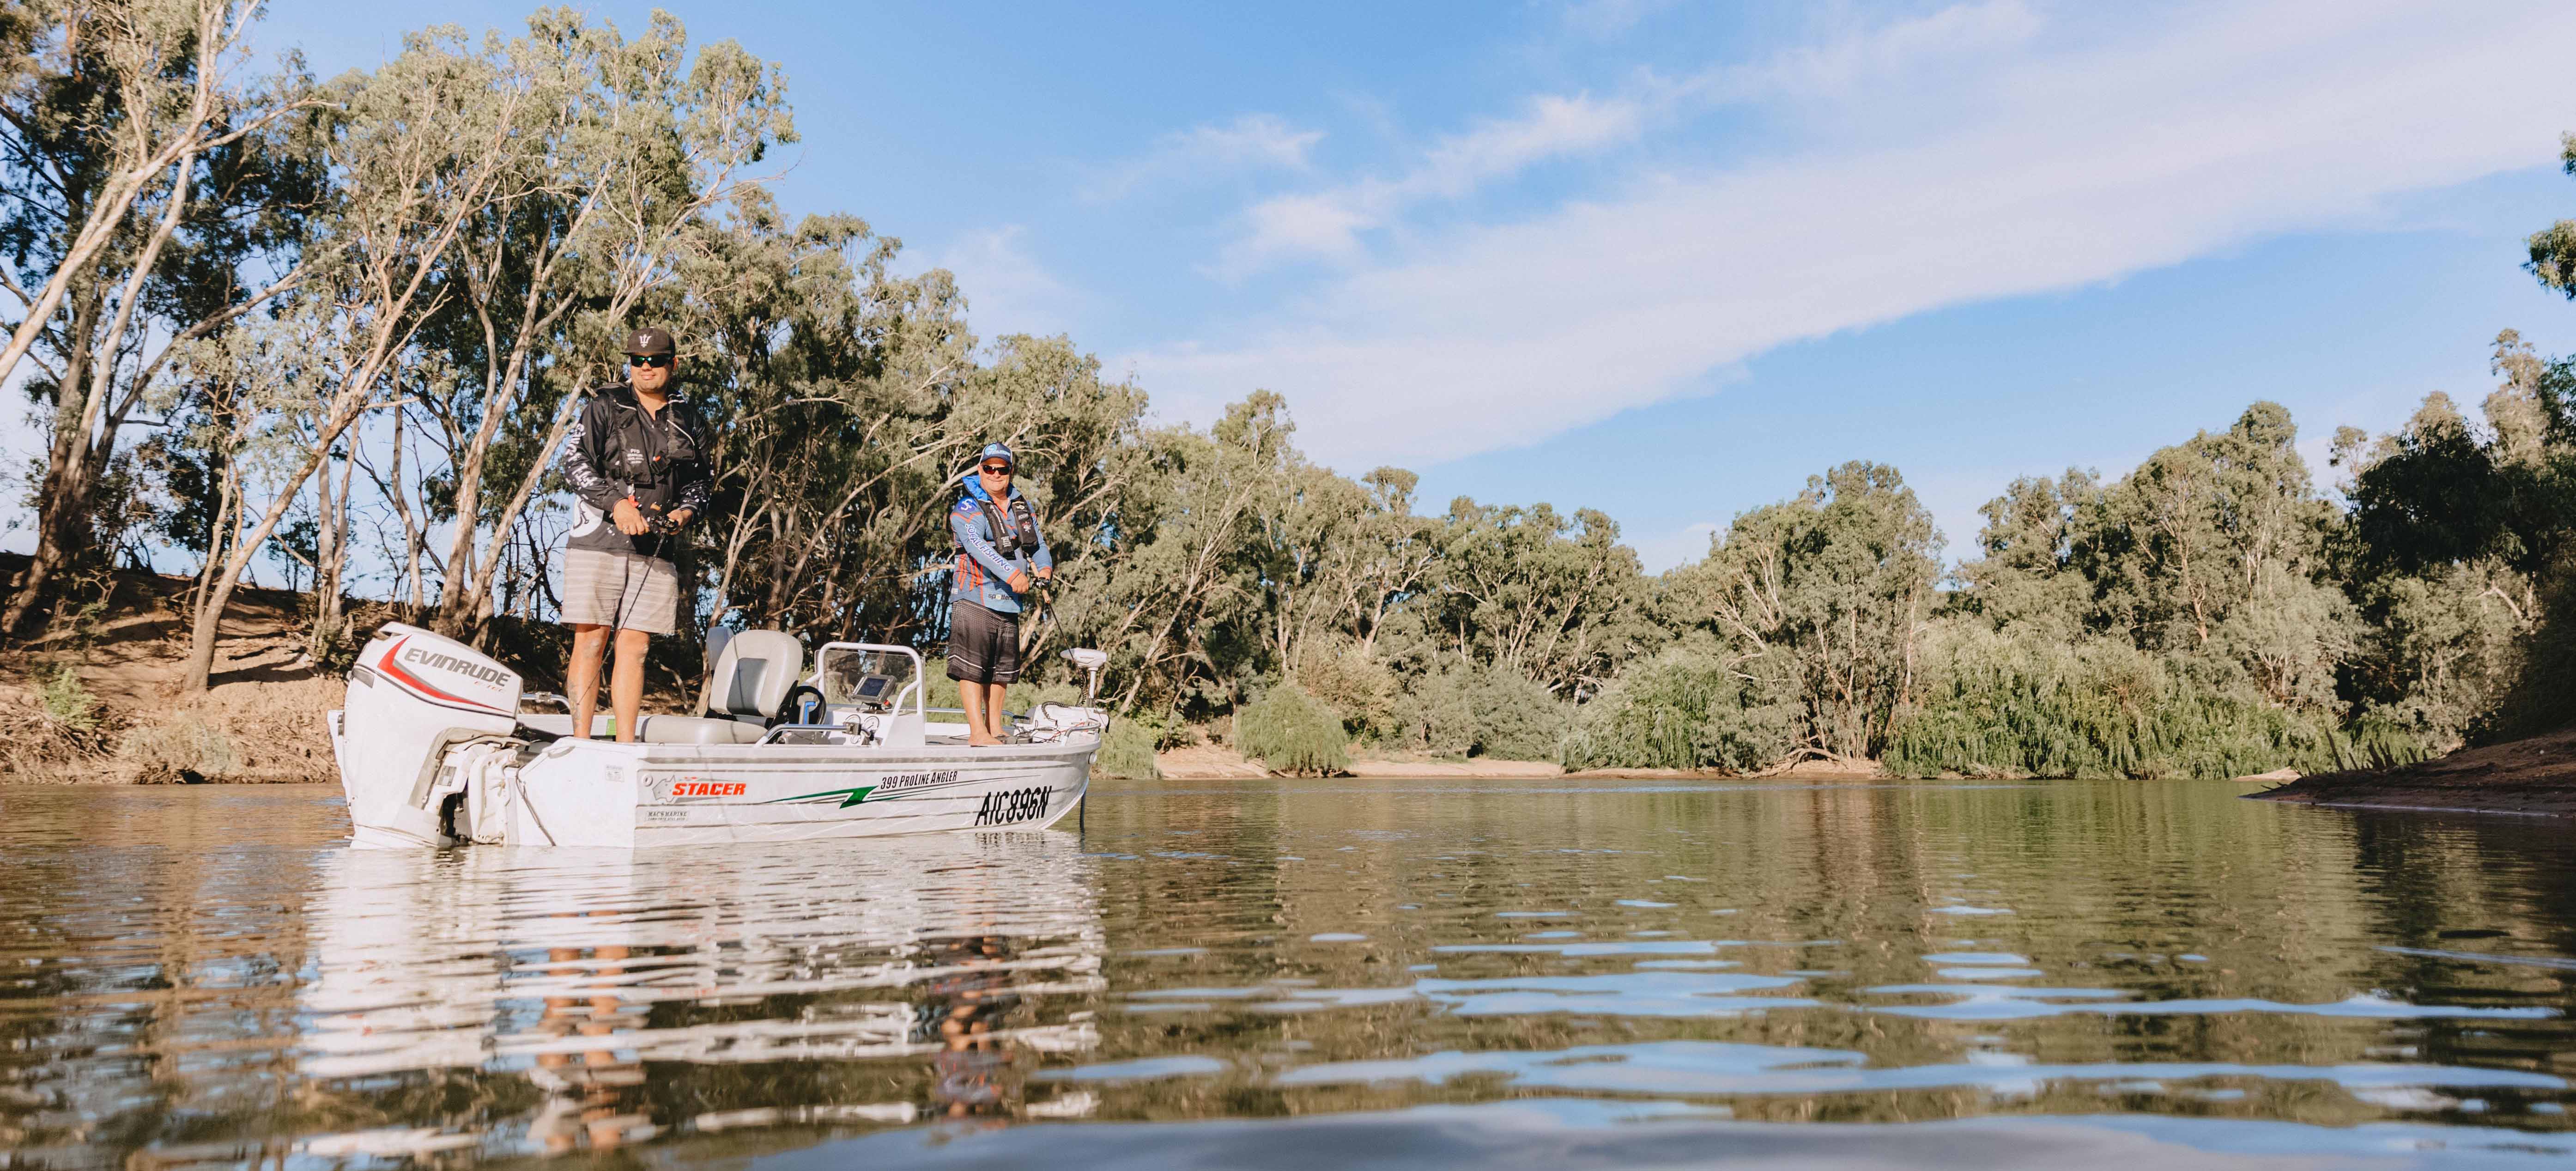 Fishing from a boat at Wiradjuri Reserve in Wagga Wagga